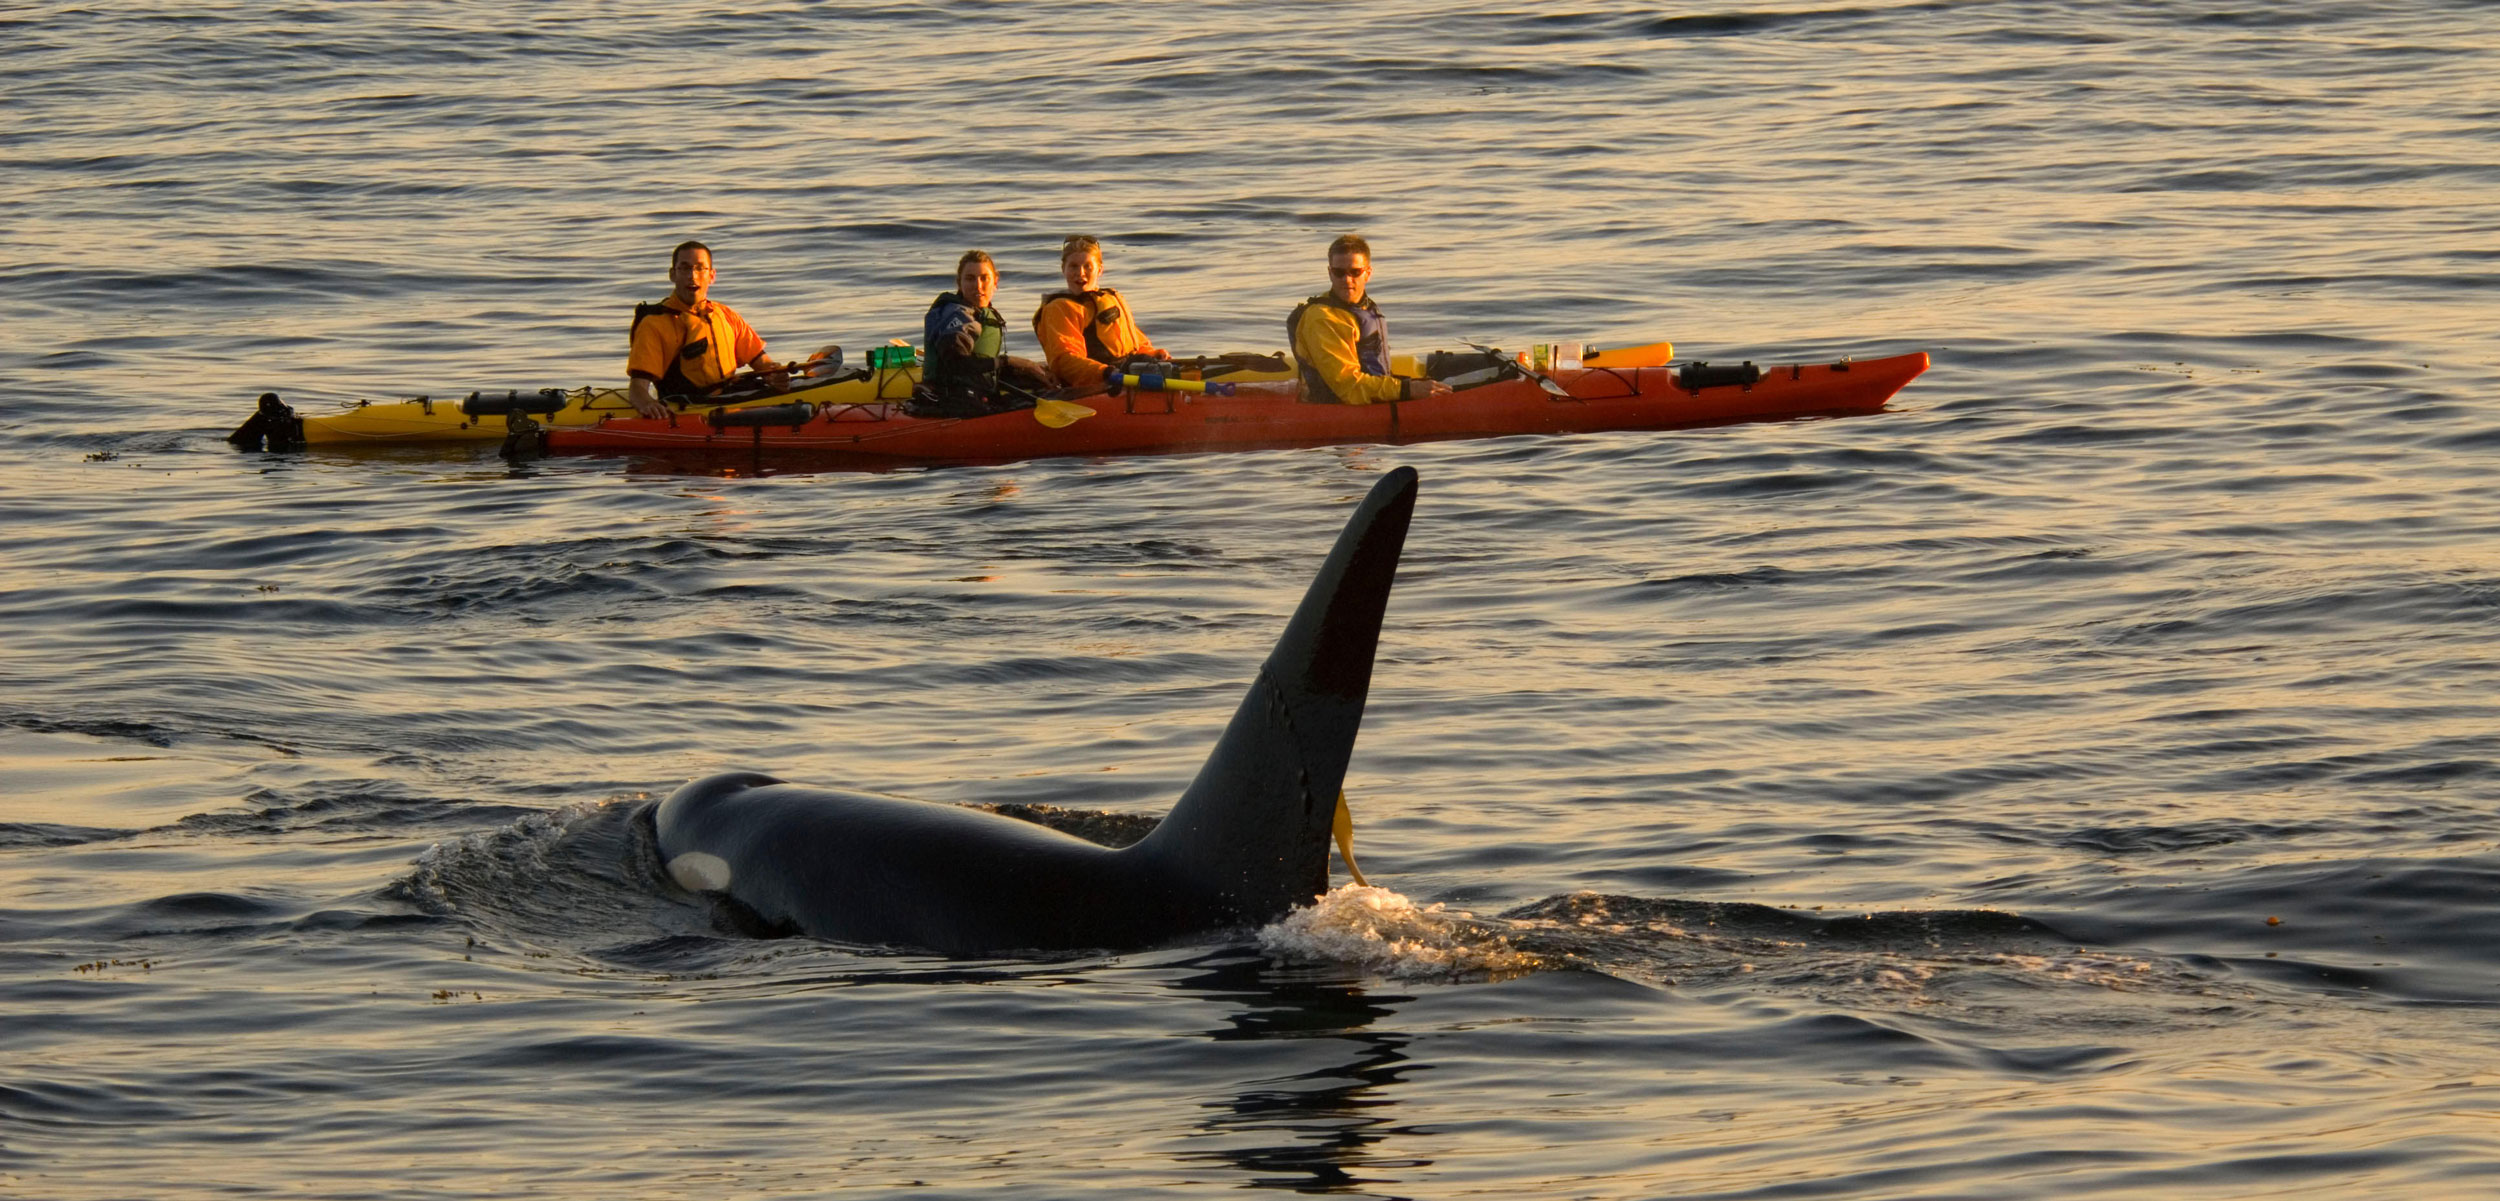 A killer whale surfacing near kayakers in the Salish Sea